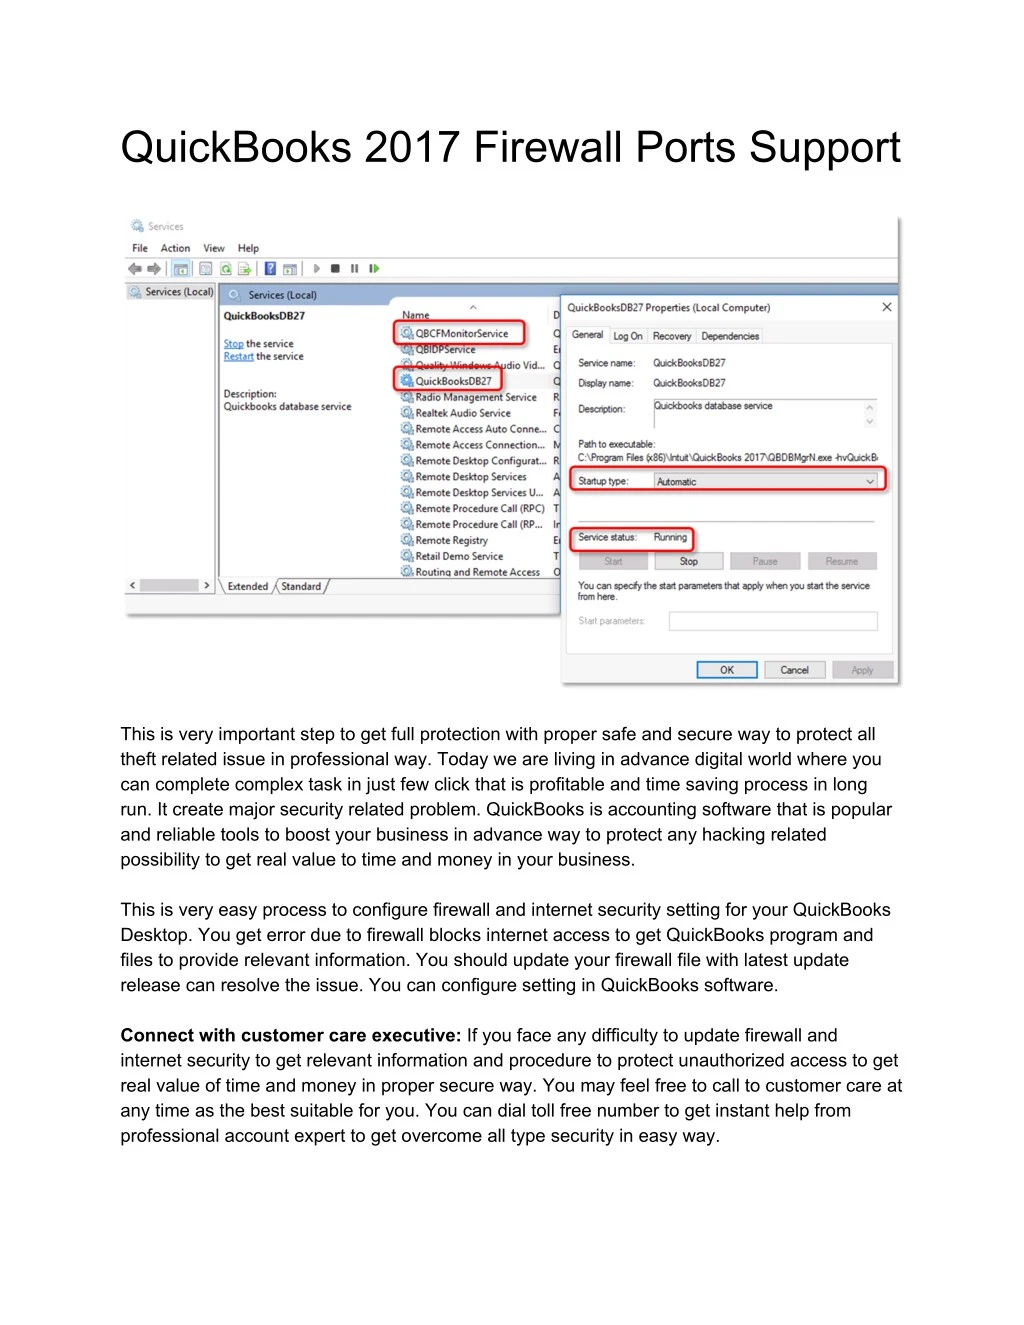 quickbooks 2017 firewall ports support